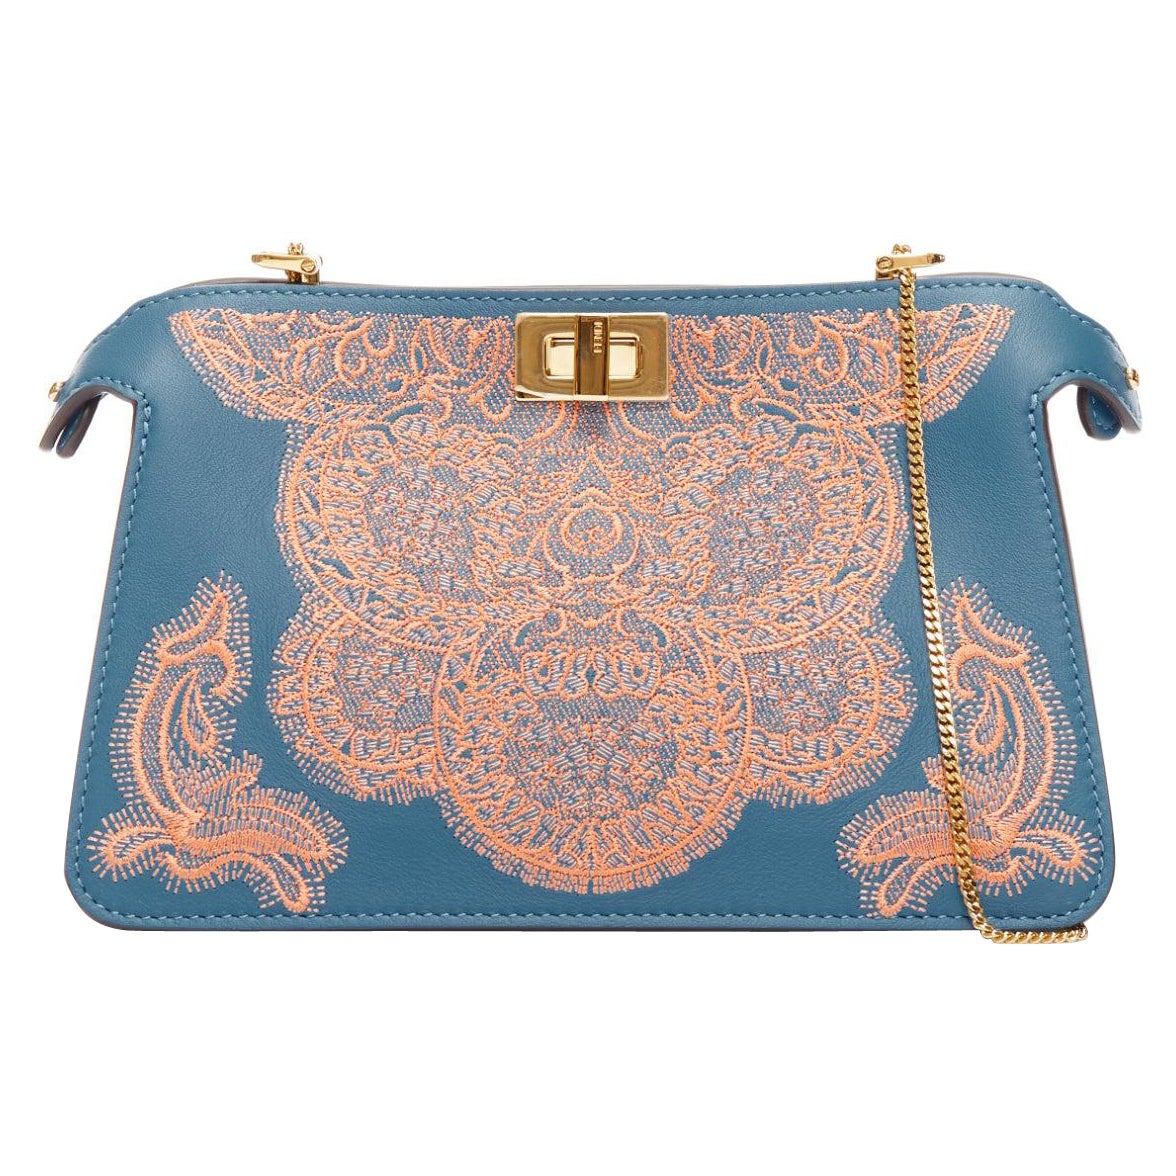 FENDI Peekaboo pink lace applique blue leather gold buckle crossbody bag For Sale